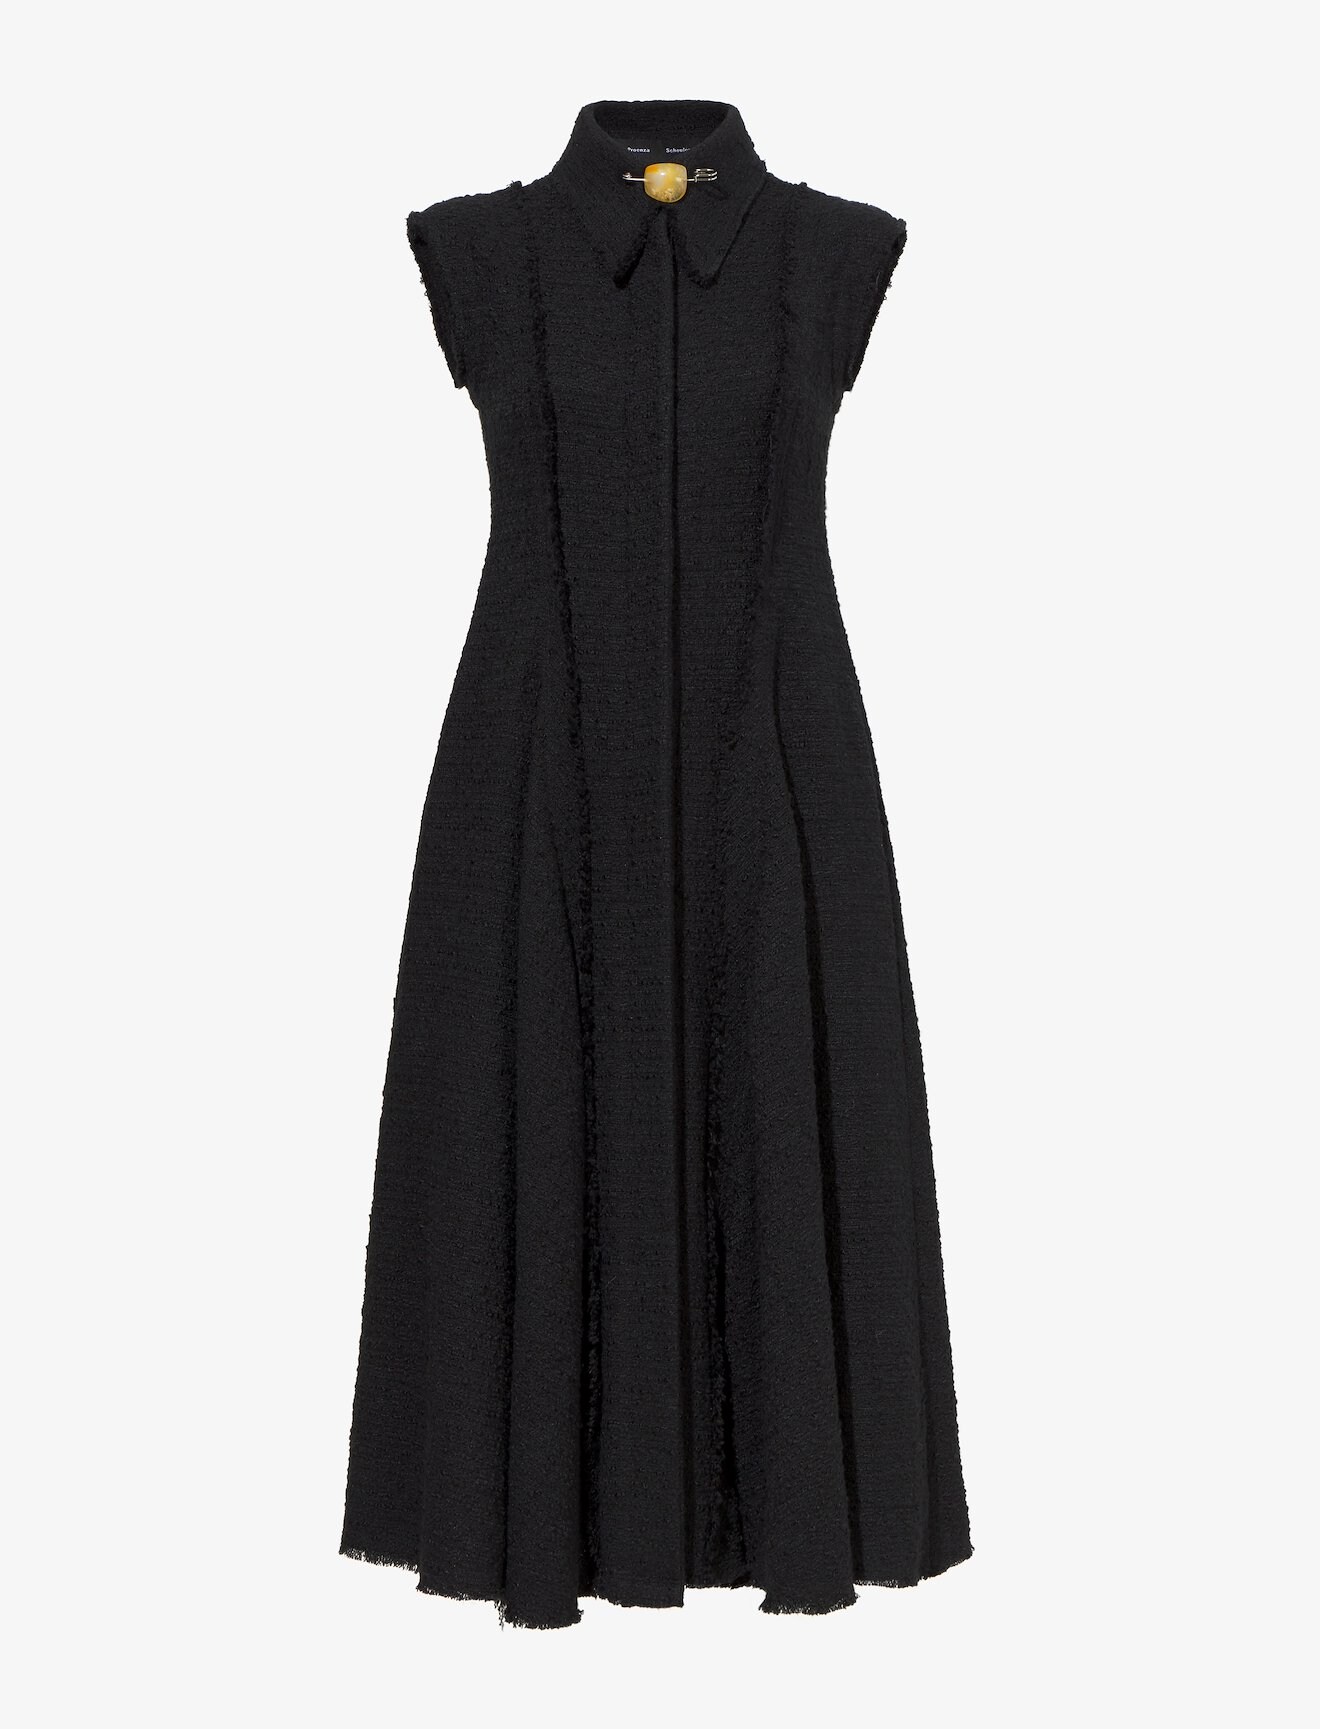 Cotton Tweed Sleeveless Dress #4